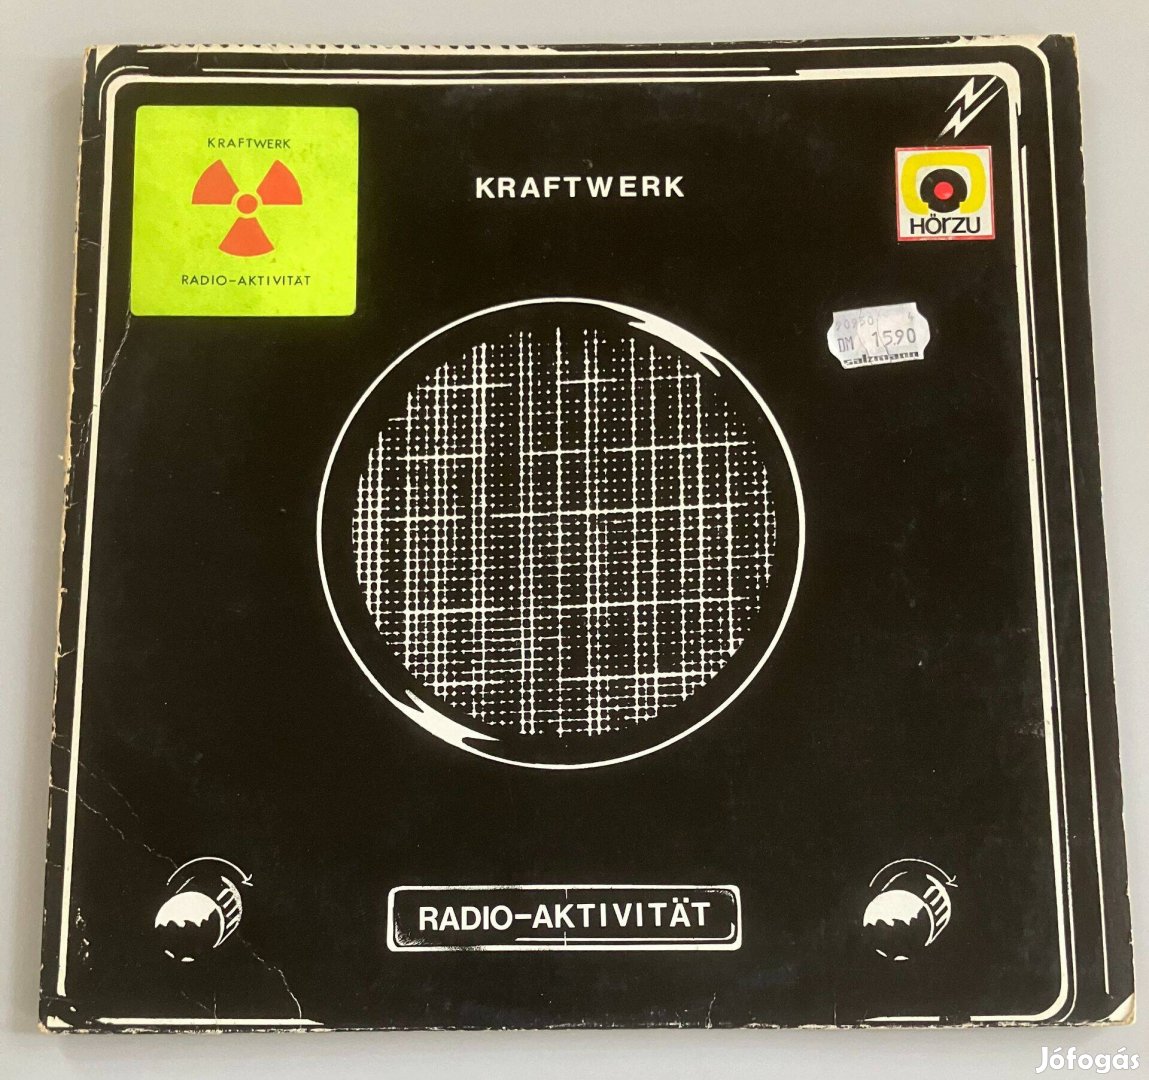 Kraftwerk - Radio-Aktivität (Made in Germany, 1975)